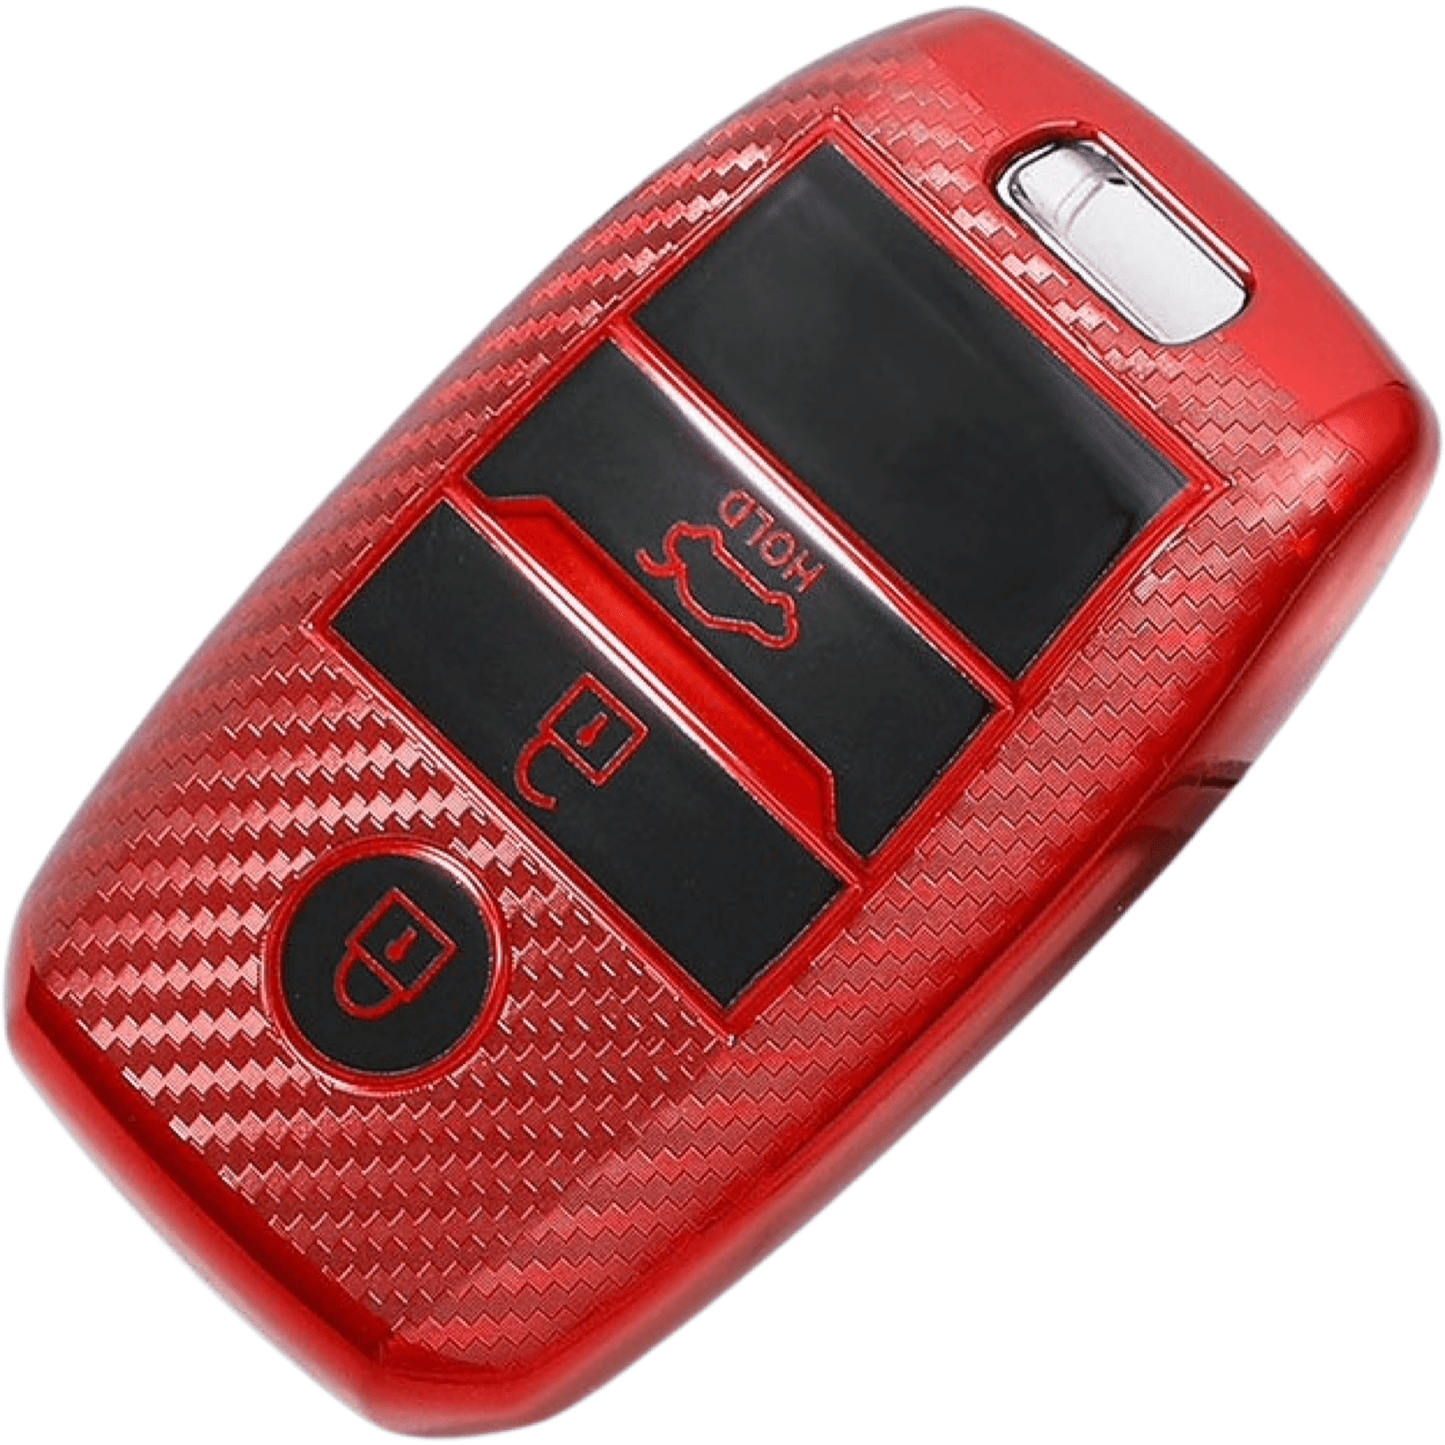 Kia Key Cover red | Cerato, Rio, Sportage, Sorento, Optima - Carbon Fibre Design | Kia Accessories - Keysleeves